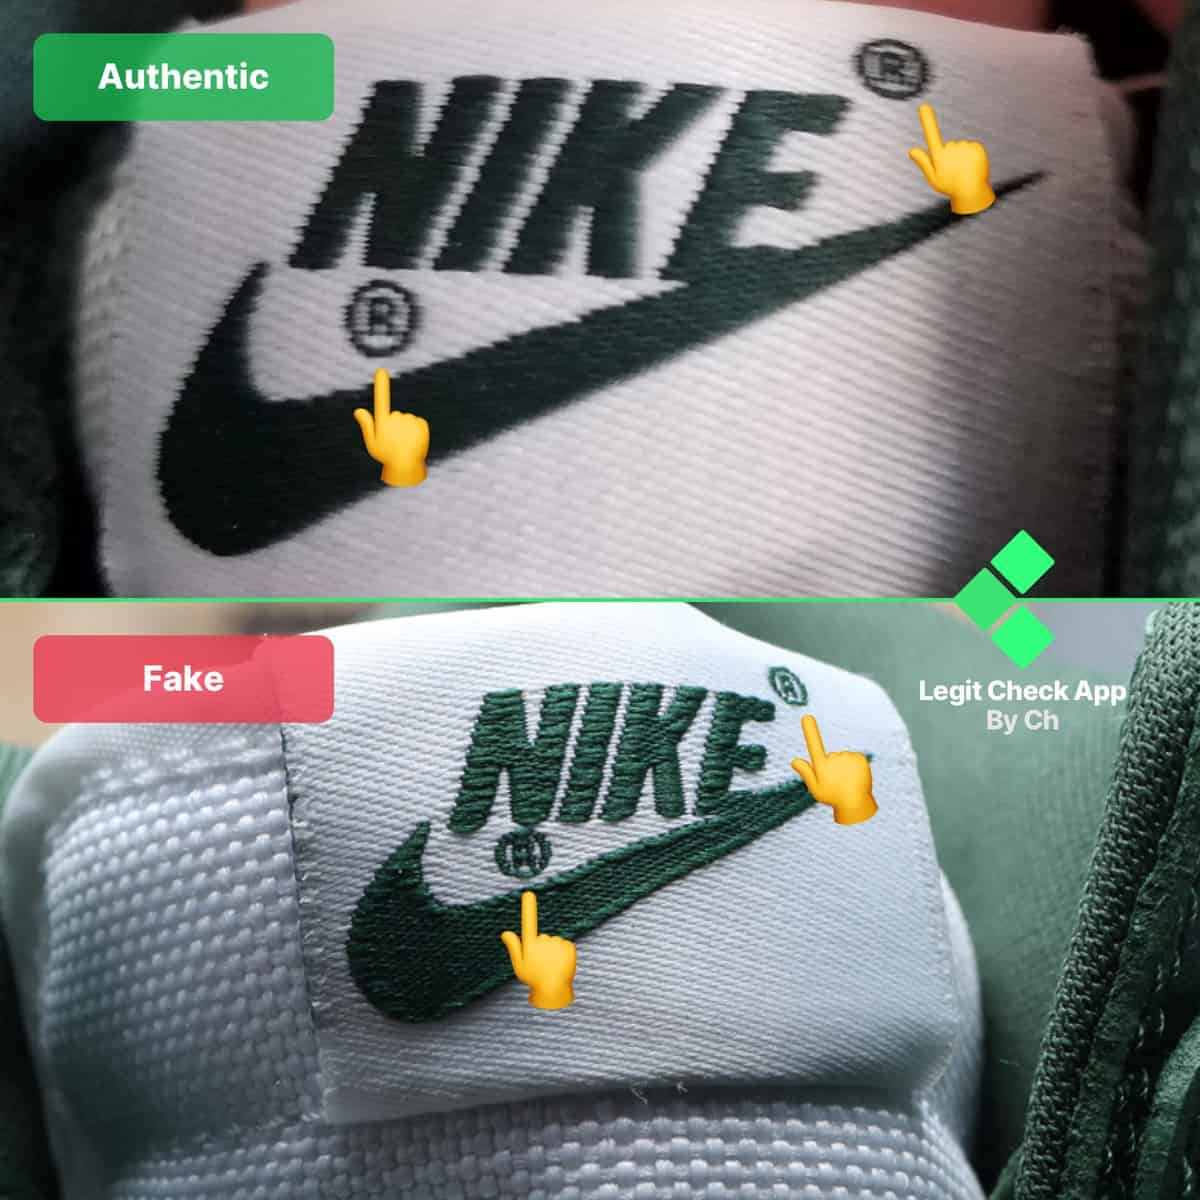 Nike x Supreme SB Dunk Stars Fake Vs Real - How To Spot Fake